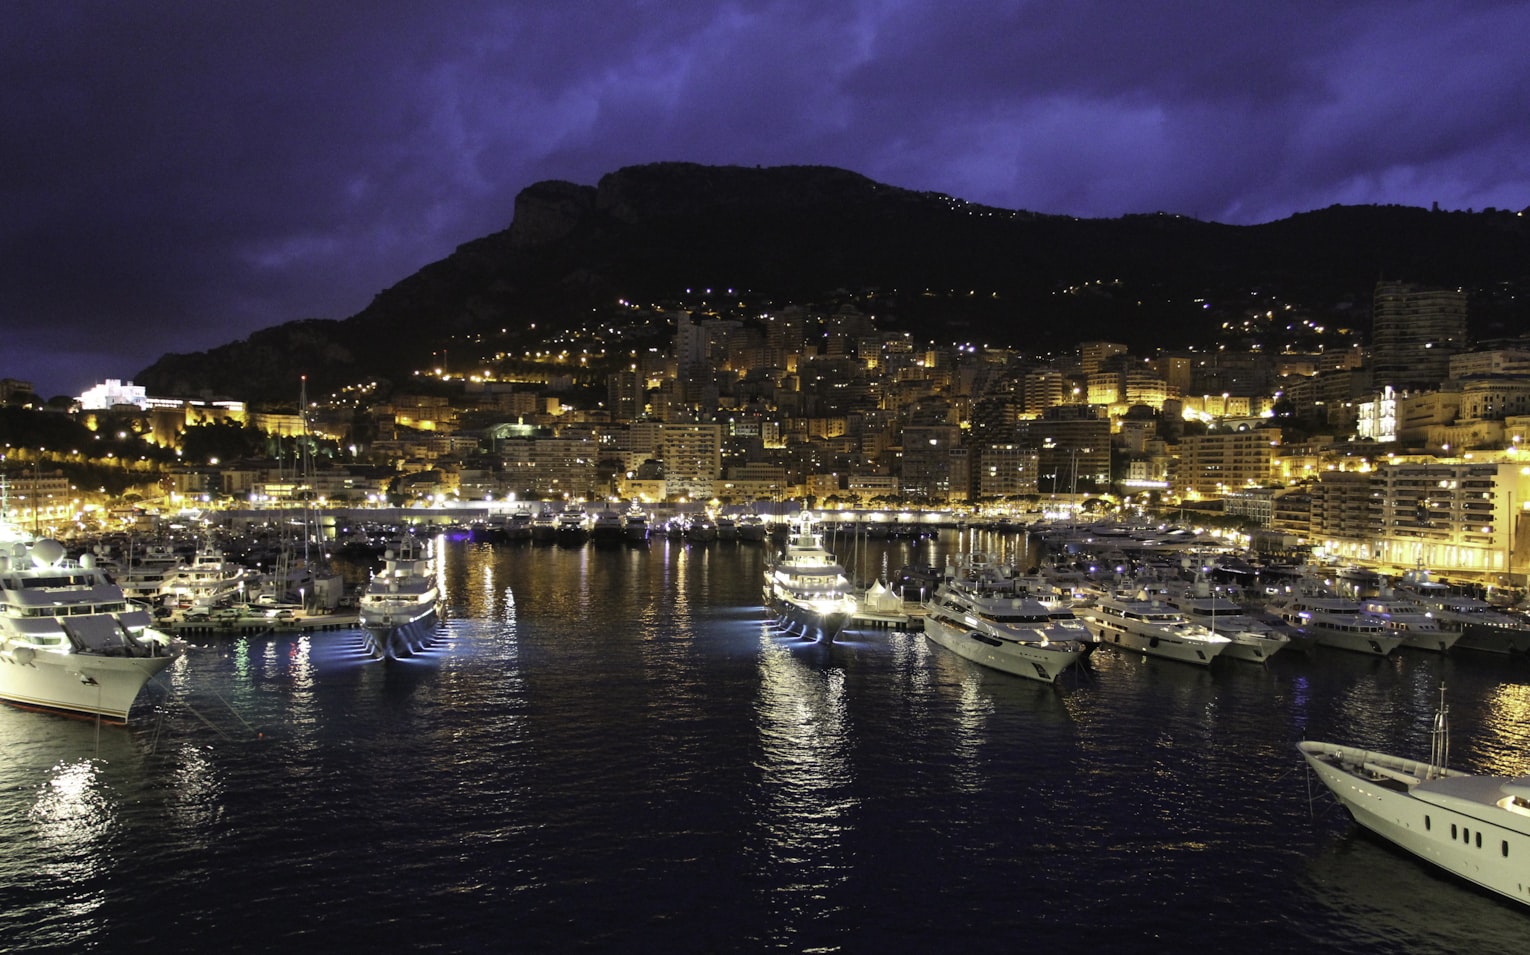 City center of Monte Carlo, Monaco - visit europe